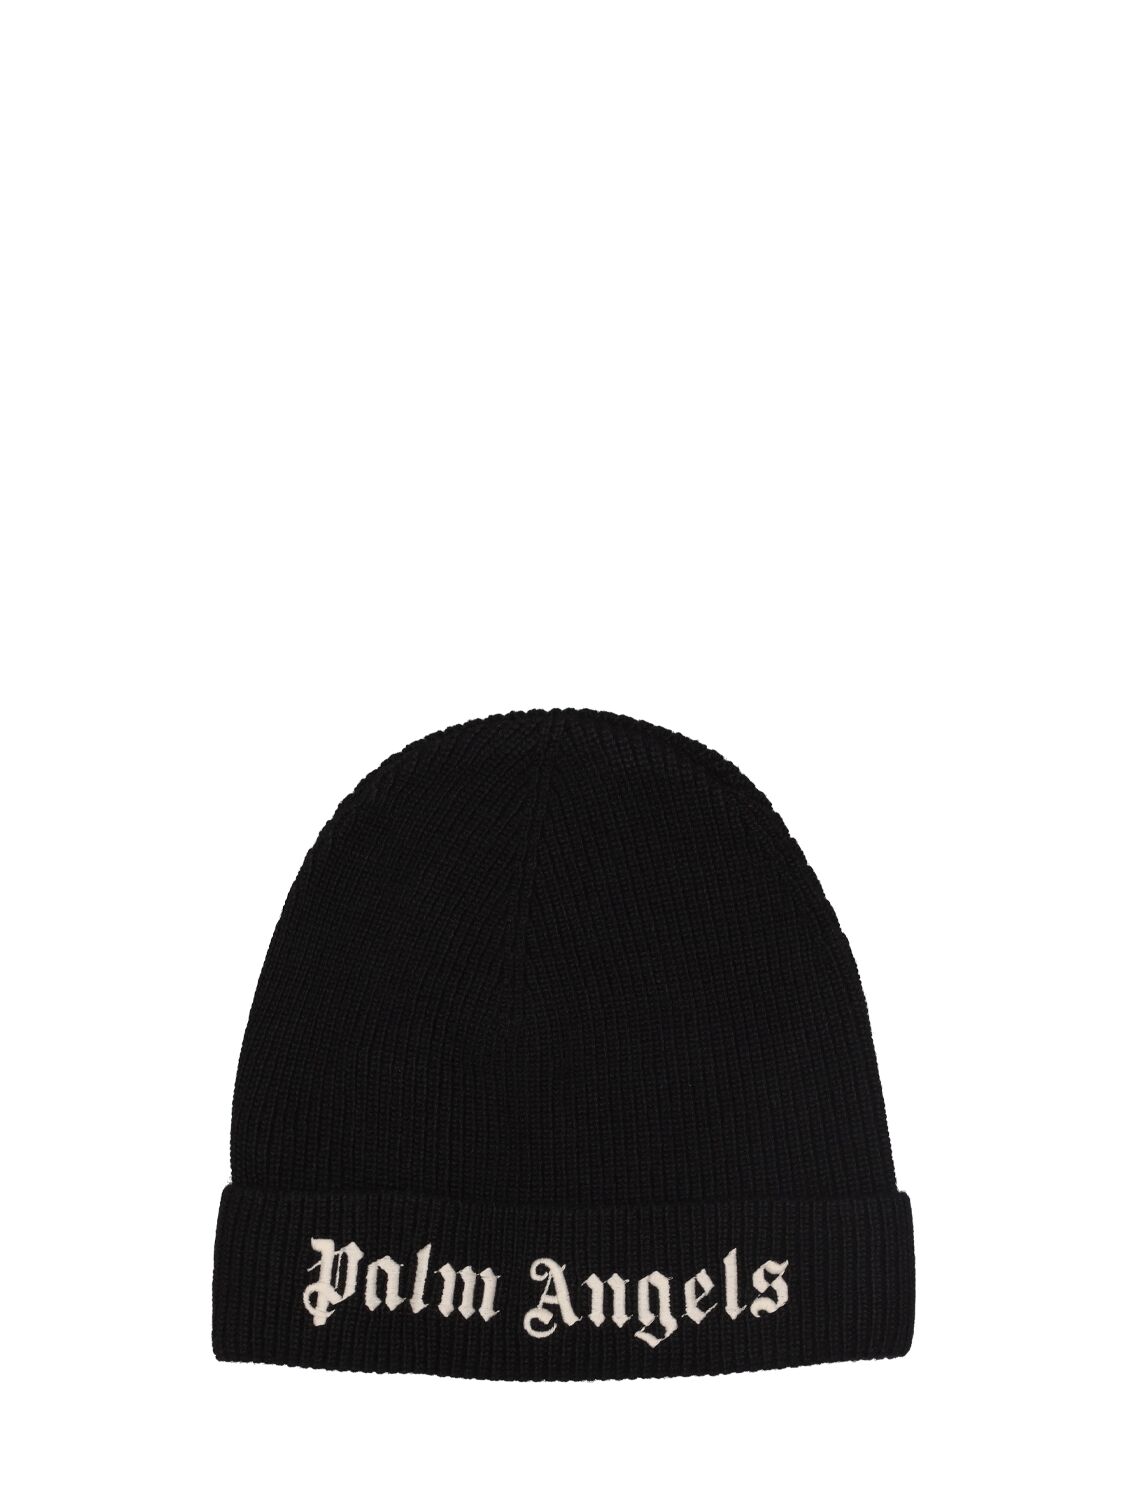 Palm Angels Kids' Wool Blend Knit Beanie In Black